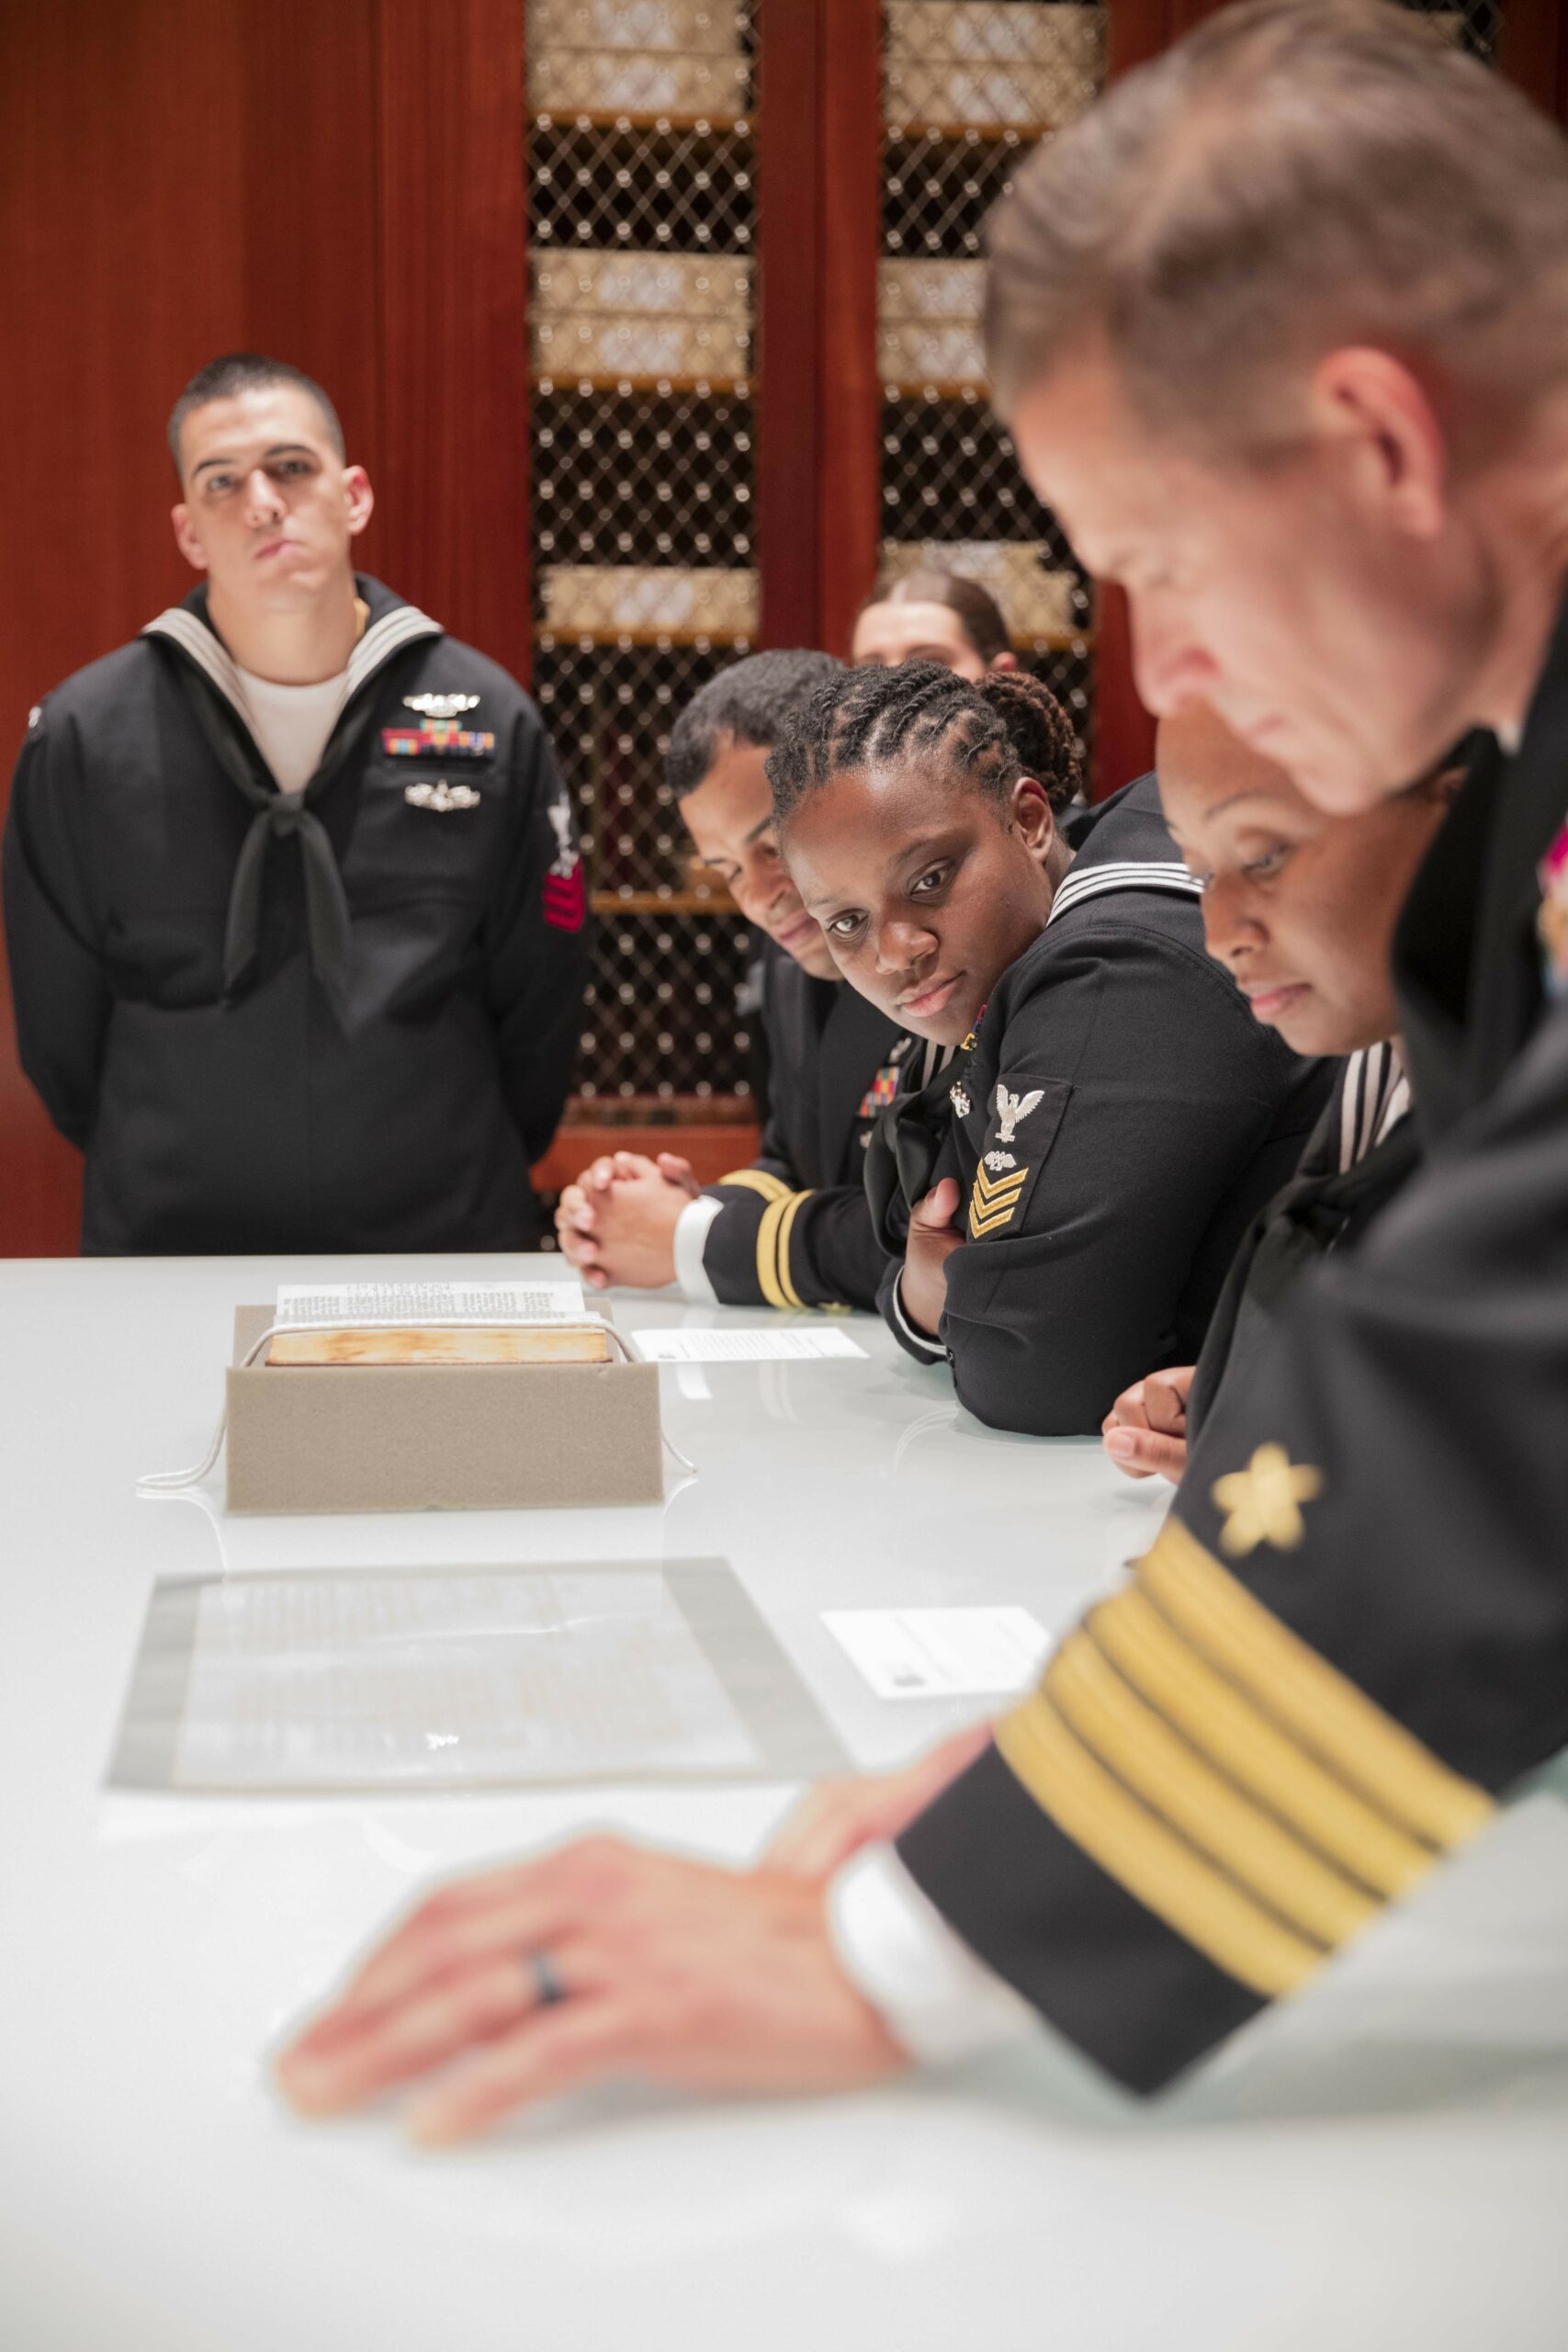 Top sailors of the USS George Washington visit Mount Vernon